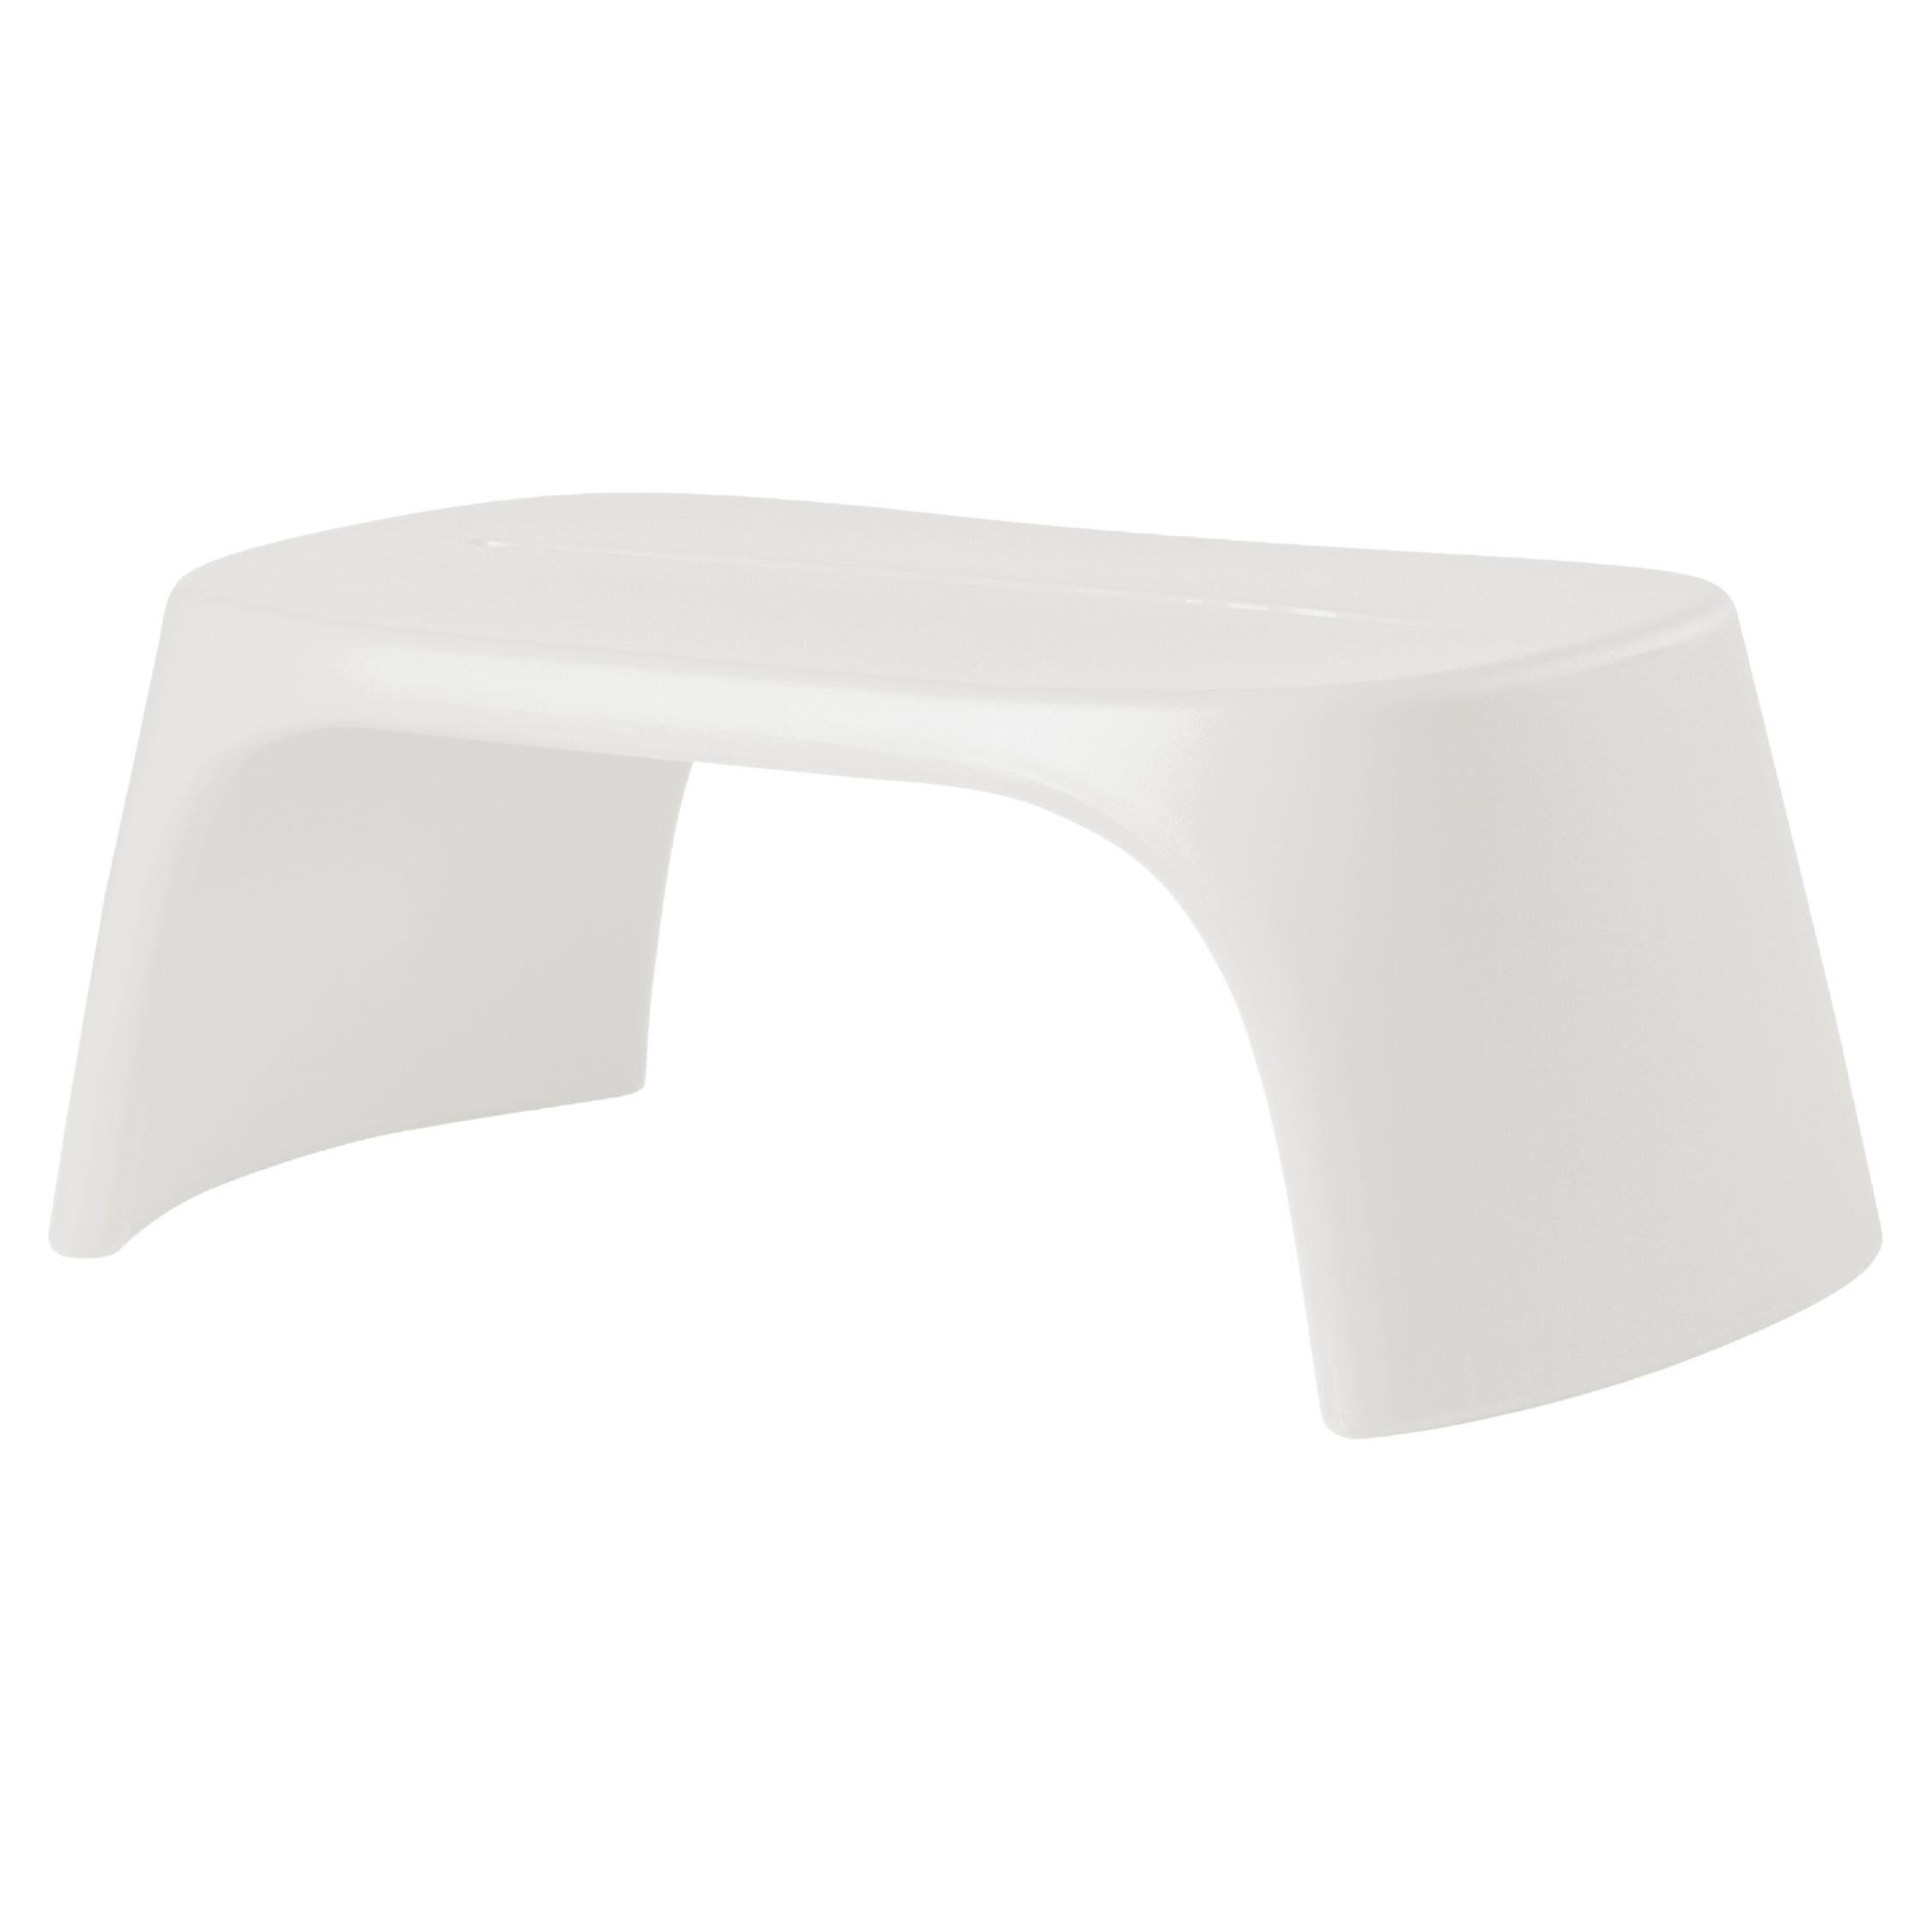 Slide Design Amélie Panchetta Bench in Milky White by Italo Pertichini For Sale